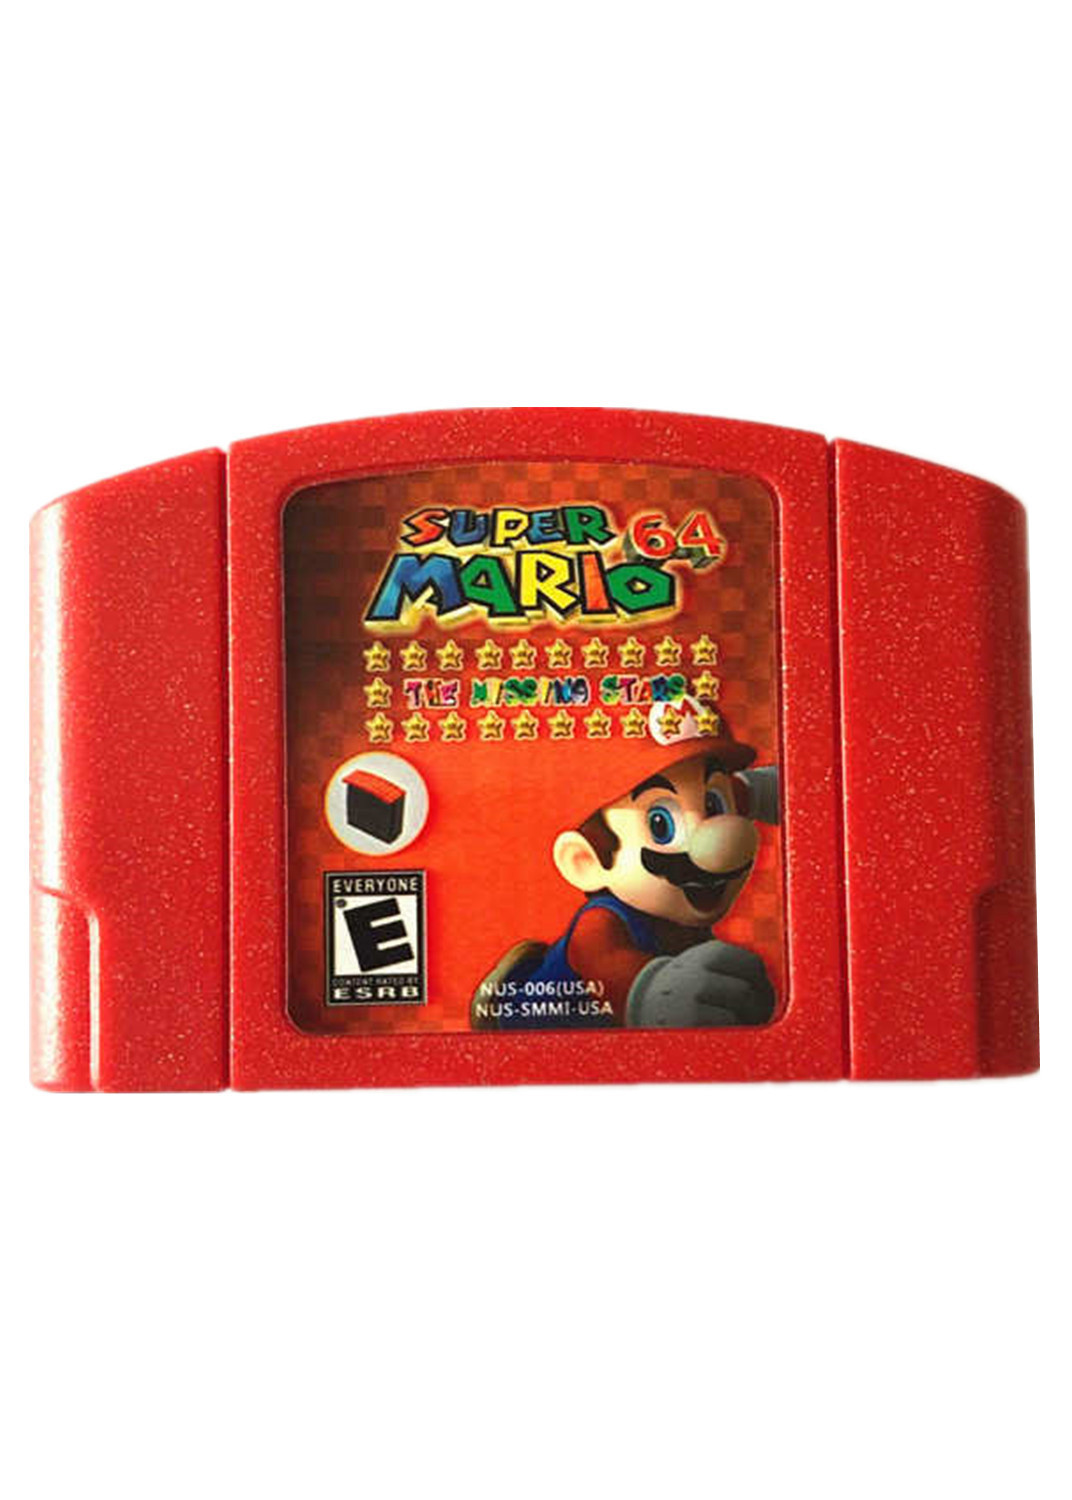 Super Mario 64 The Missing Stars Game Cartridge For Nintendo 64 N64 USA Version